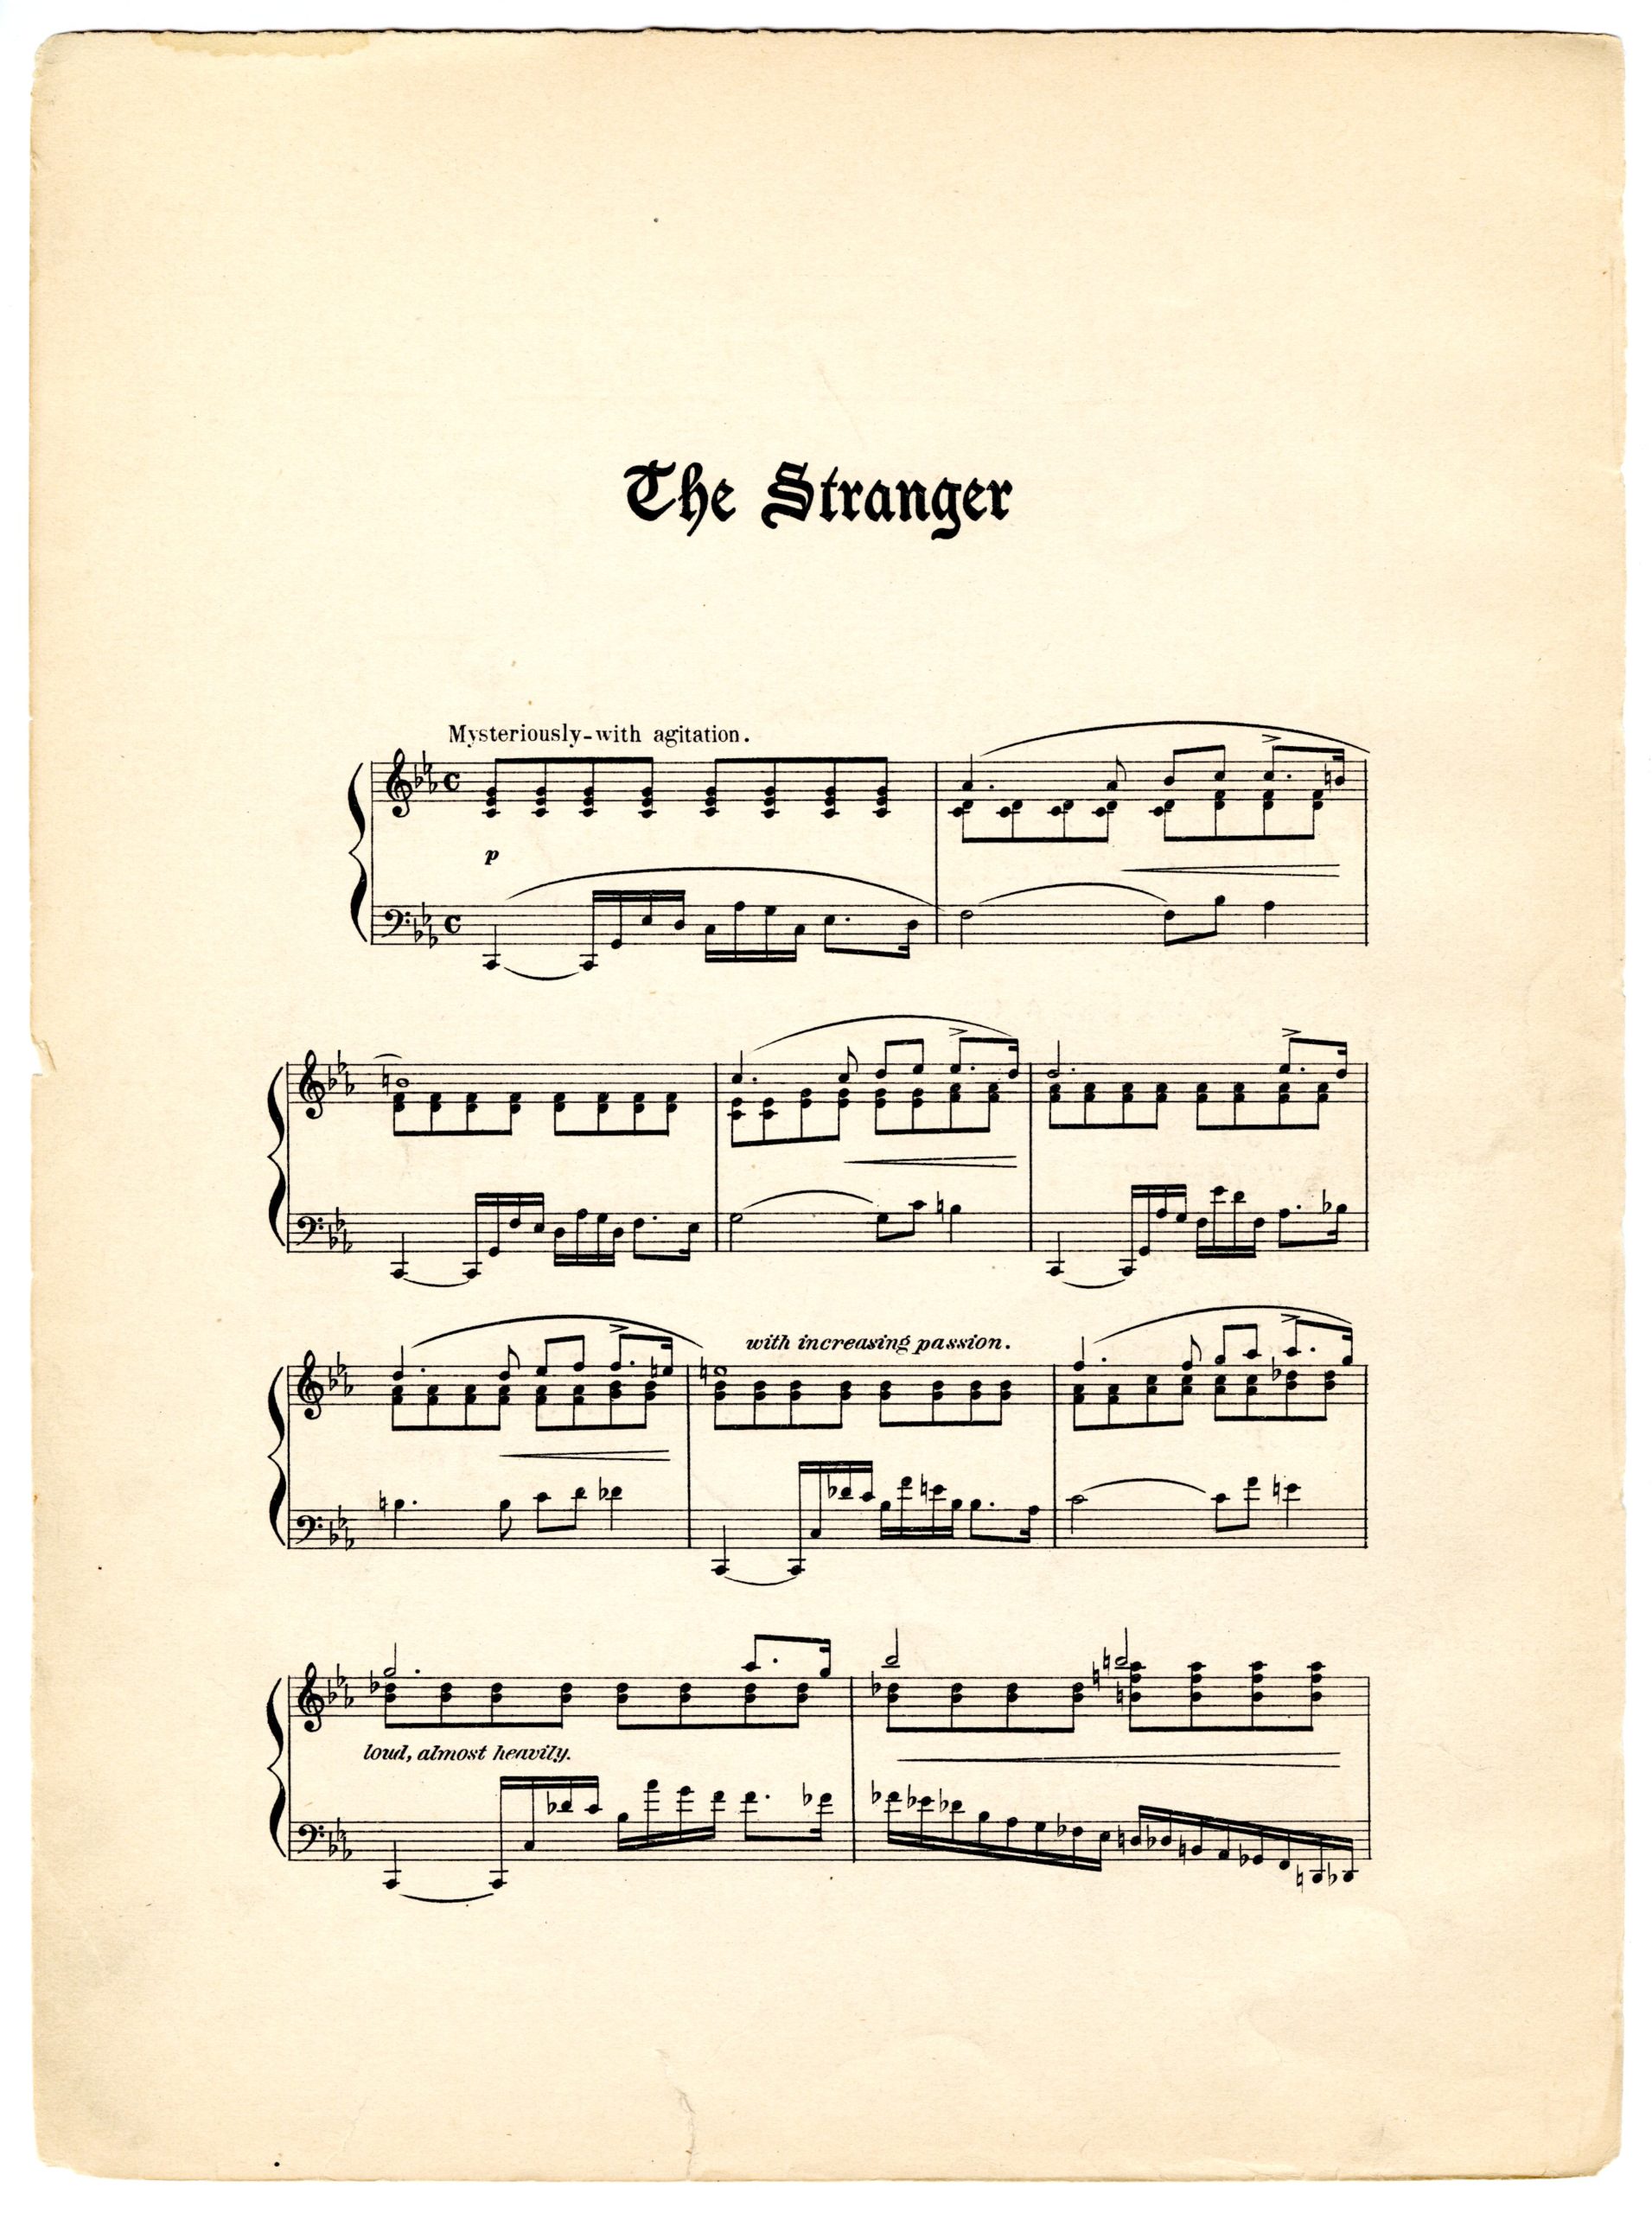 The Stranger score, page 1.